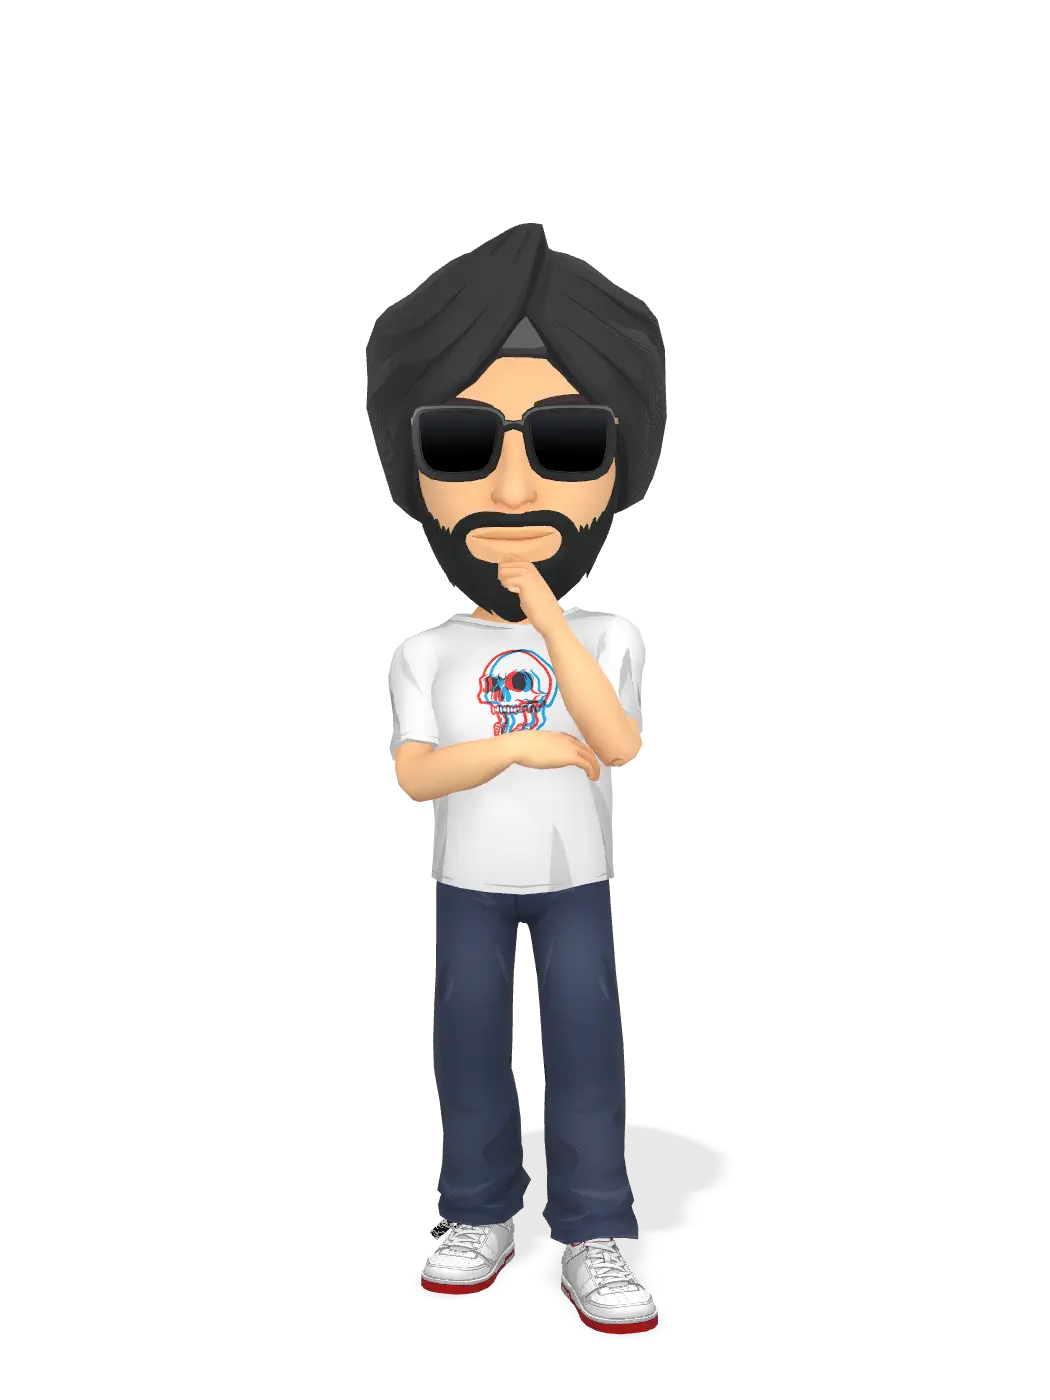 3D Bitmoji for rupinder_roop12 avatar